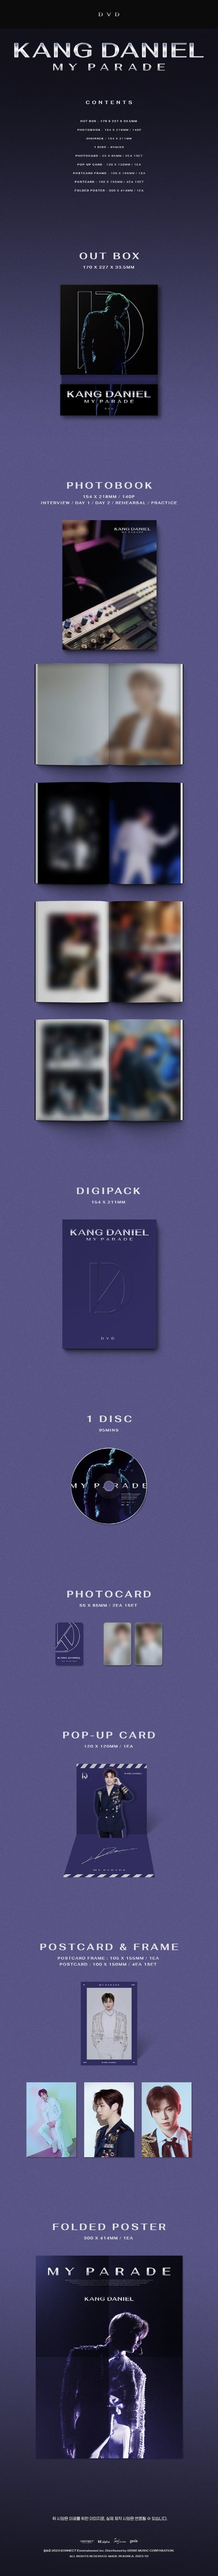 [PREORDER] KANG DANIEL - MY PARADE DVD